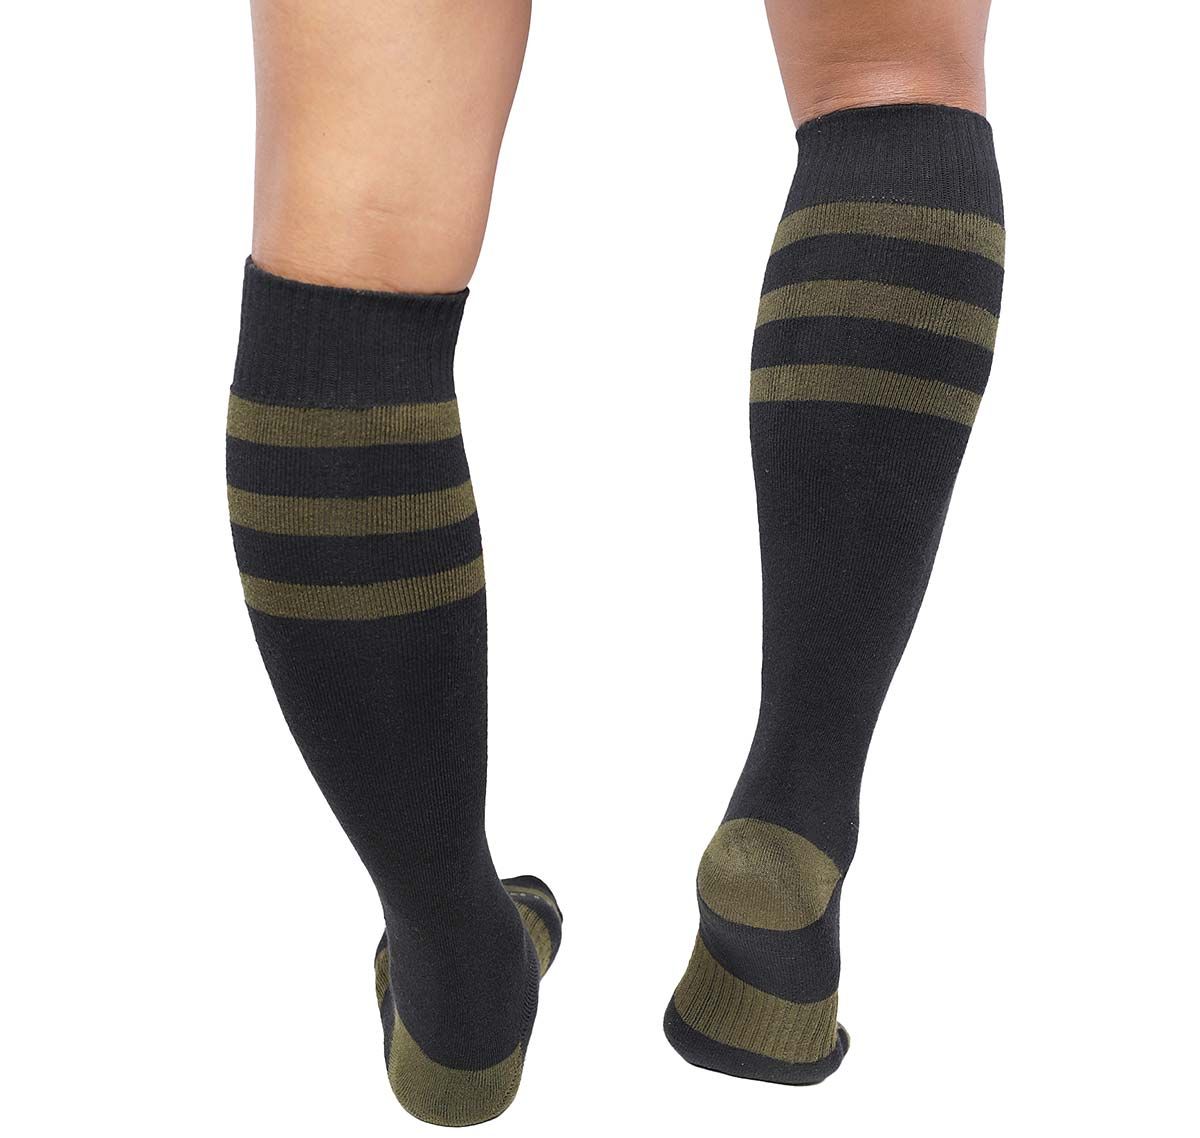 Cellblock 13 sport socks LINEBACKER KNEE HIGH SOCK, armygreen